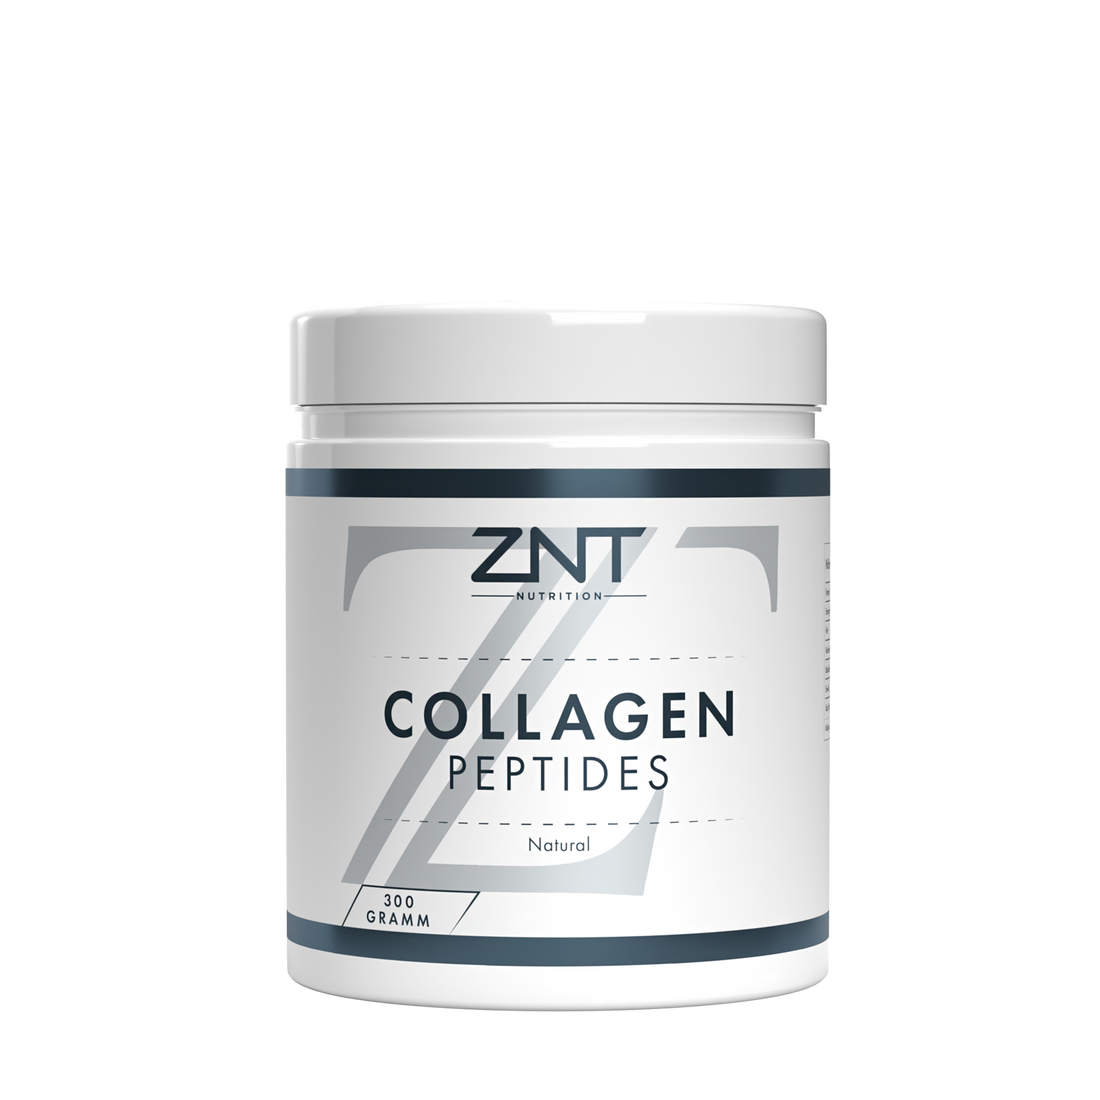 ZNT Nutrition - Collagen Peptides - Natural - 300 g